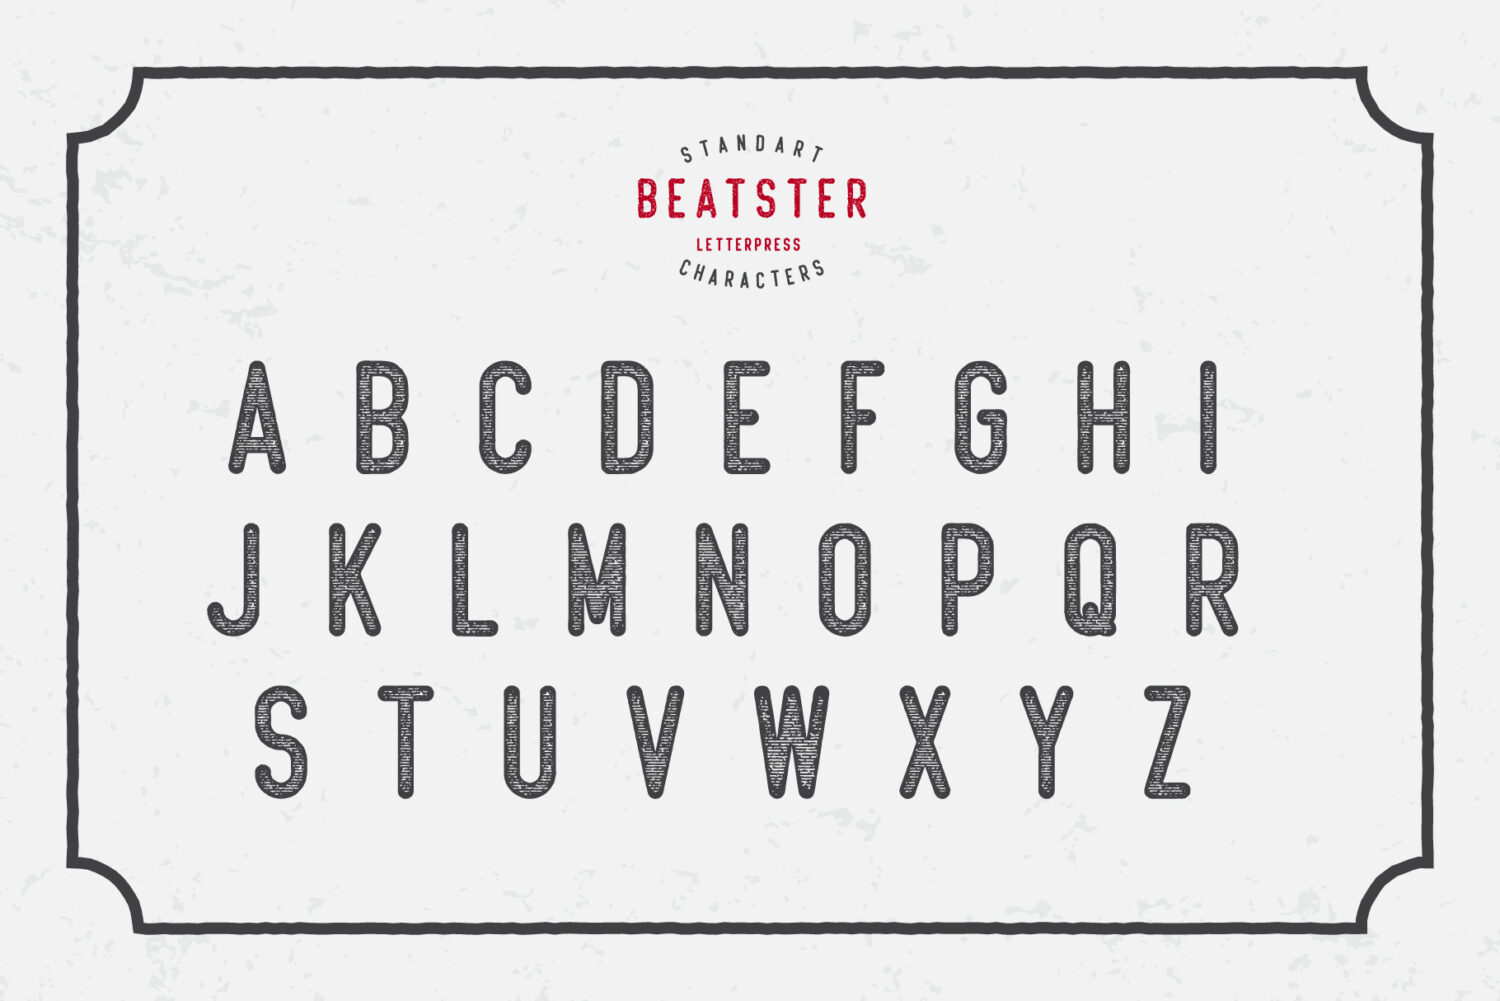 Beatster Free Font Free Font